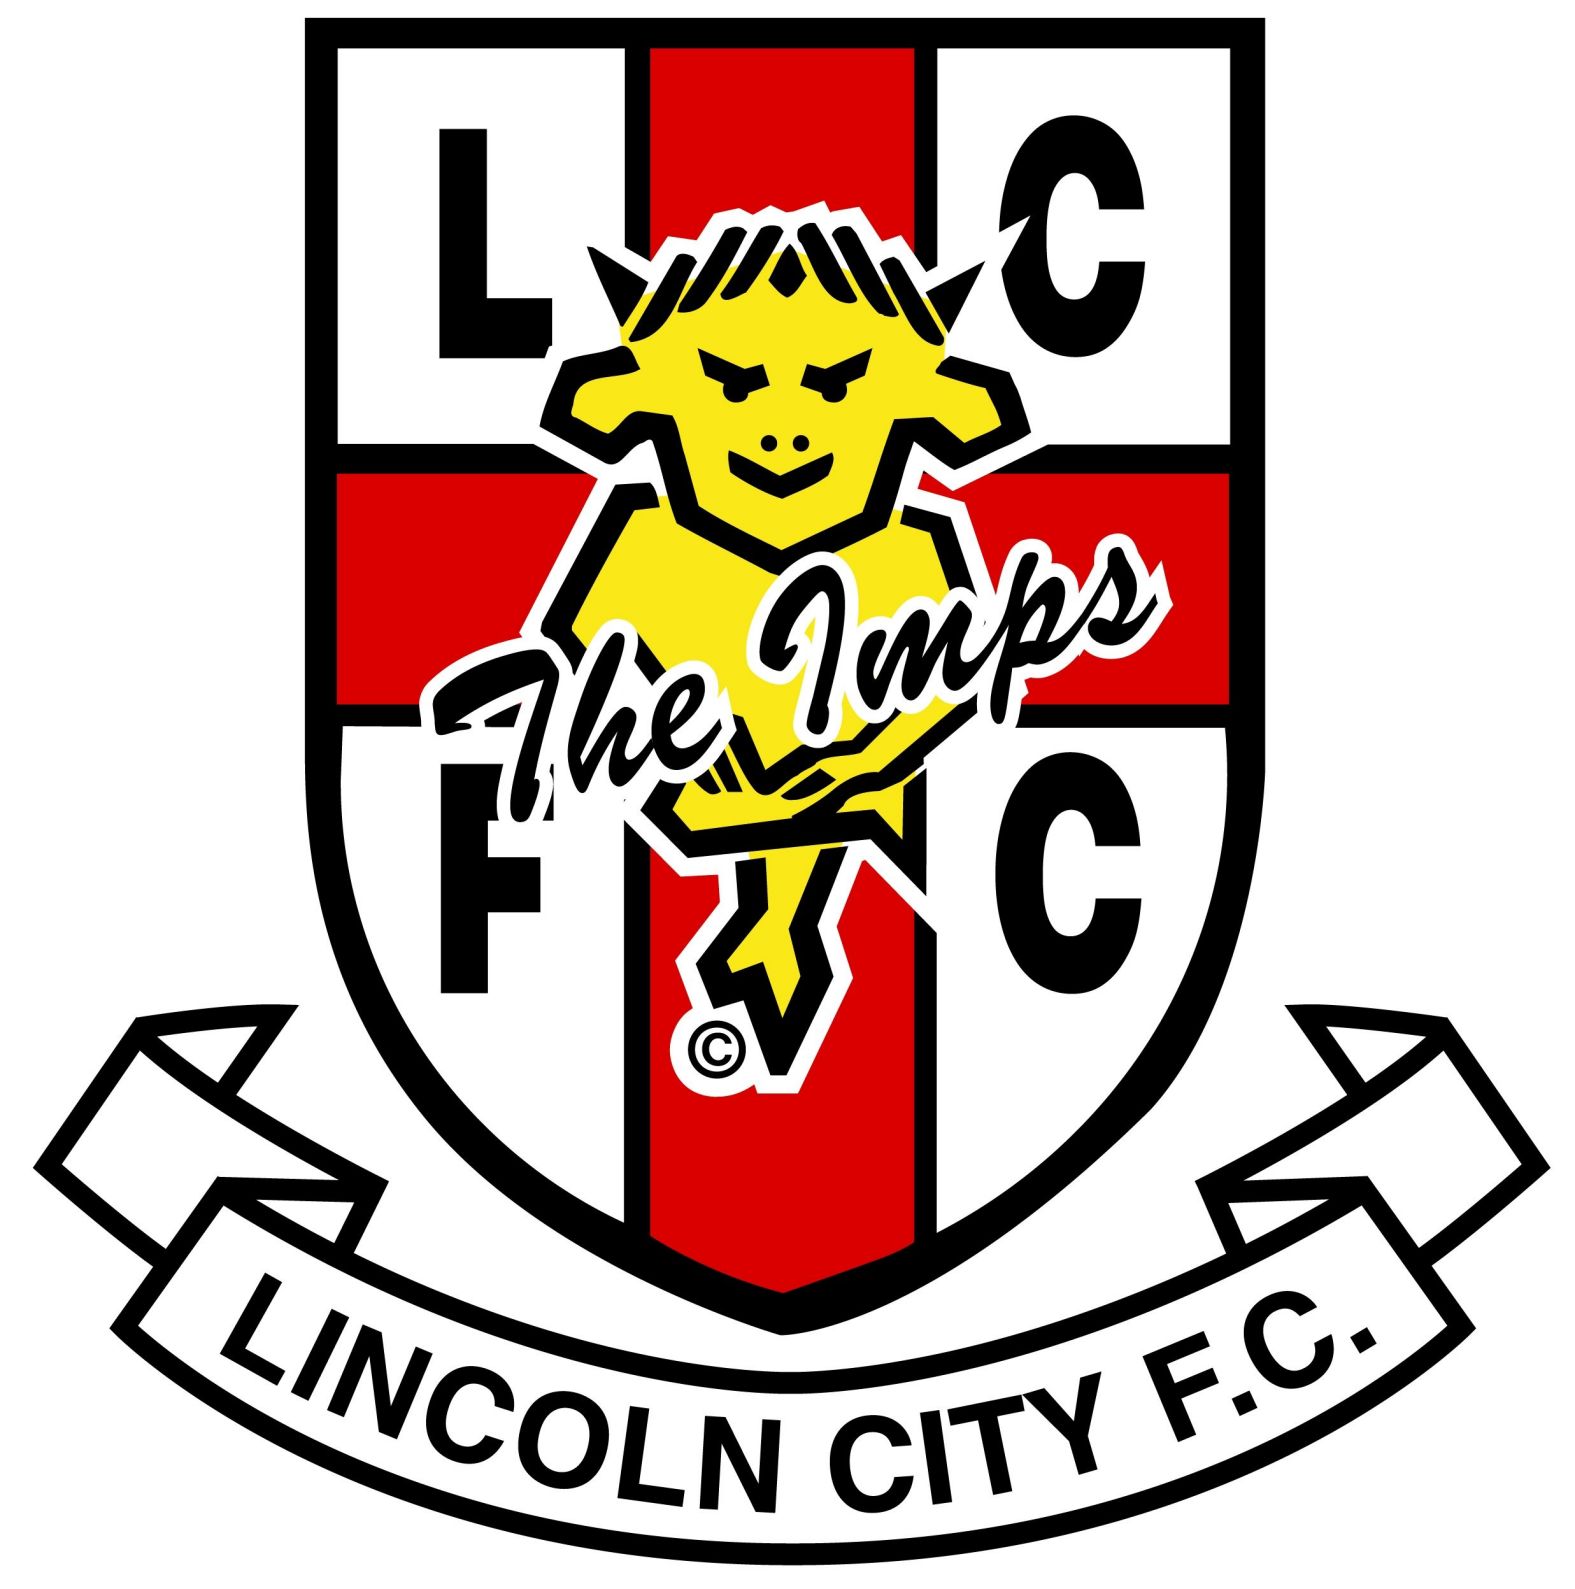 Photo courtesy of Lincoln City Football Club. Copyright © LCFC 2010